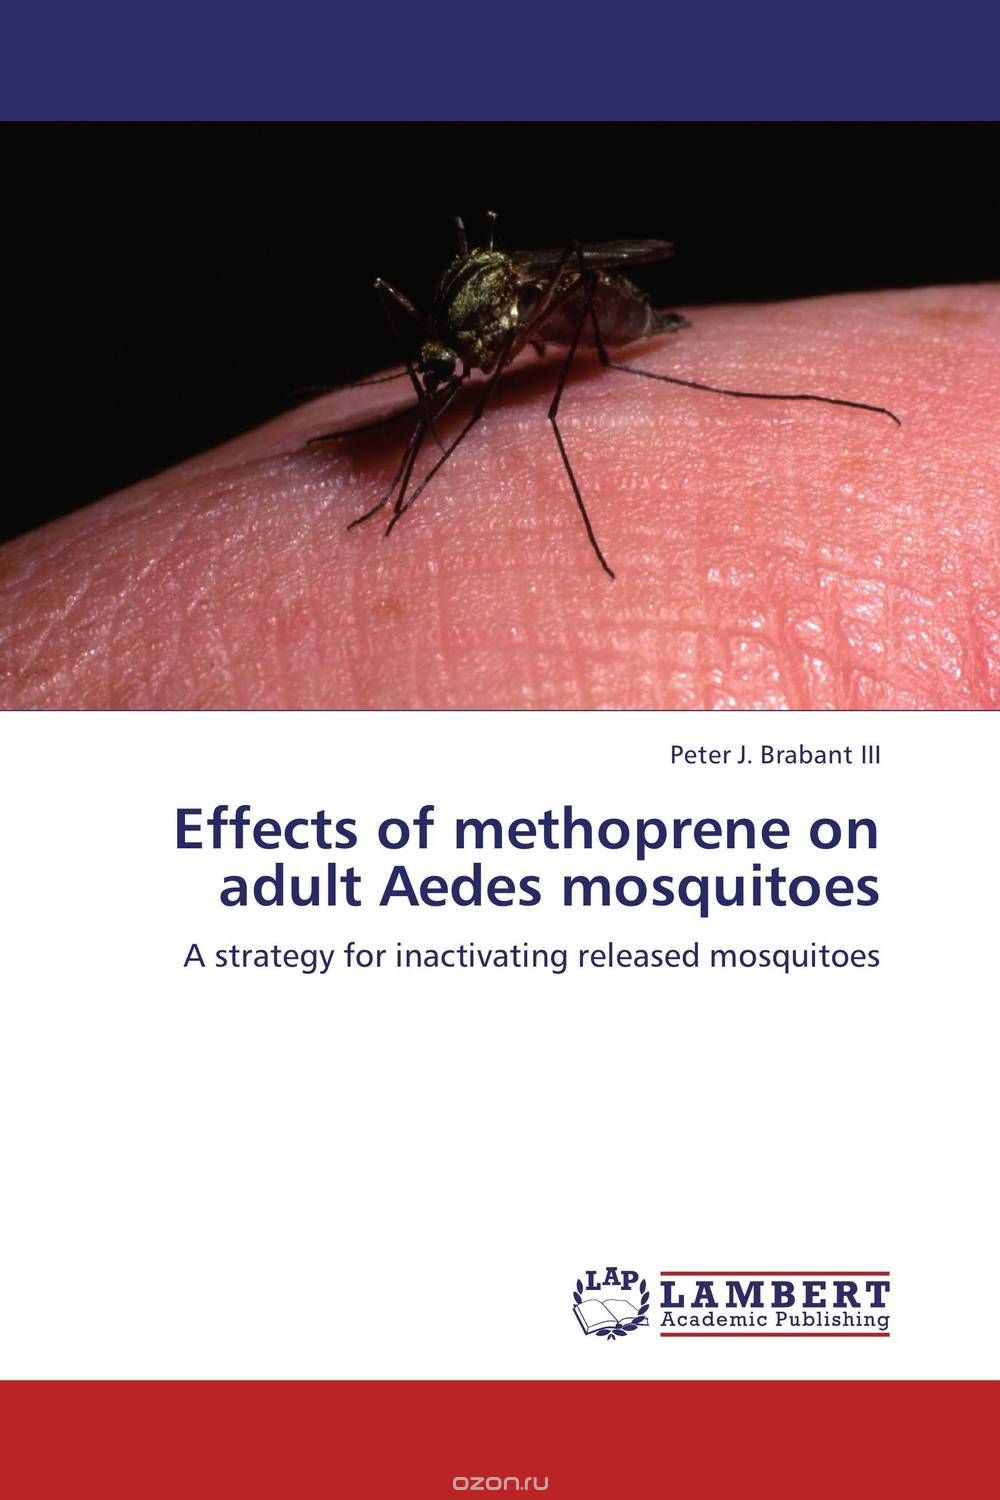 Скачать книгу "Effects of methoprene on adult Aedes mosquitoes"